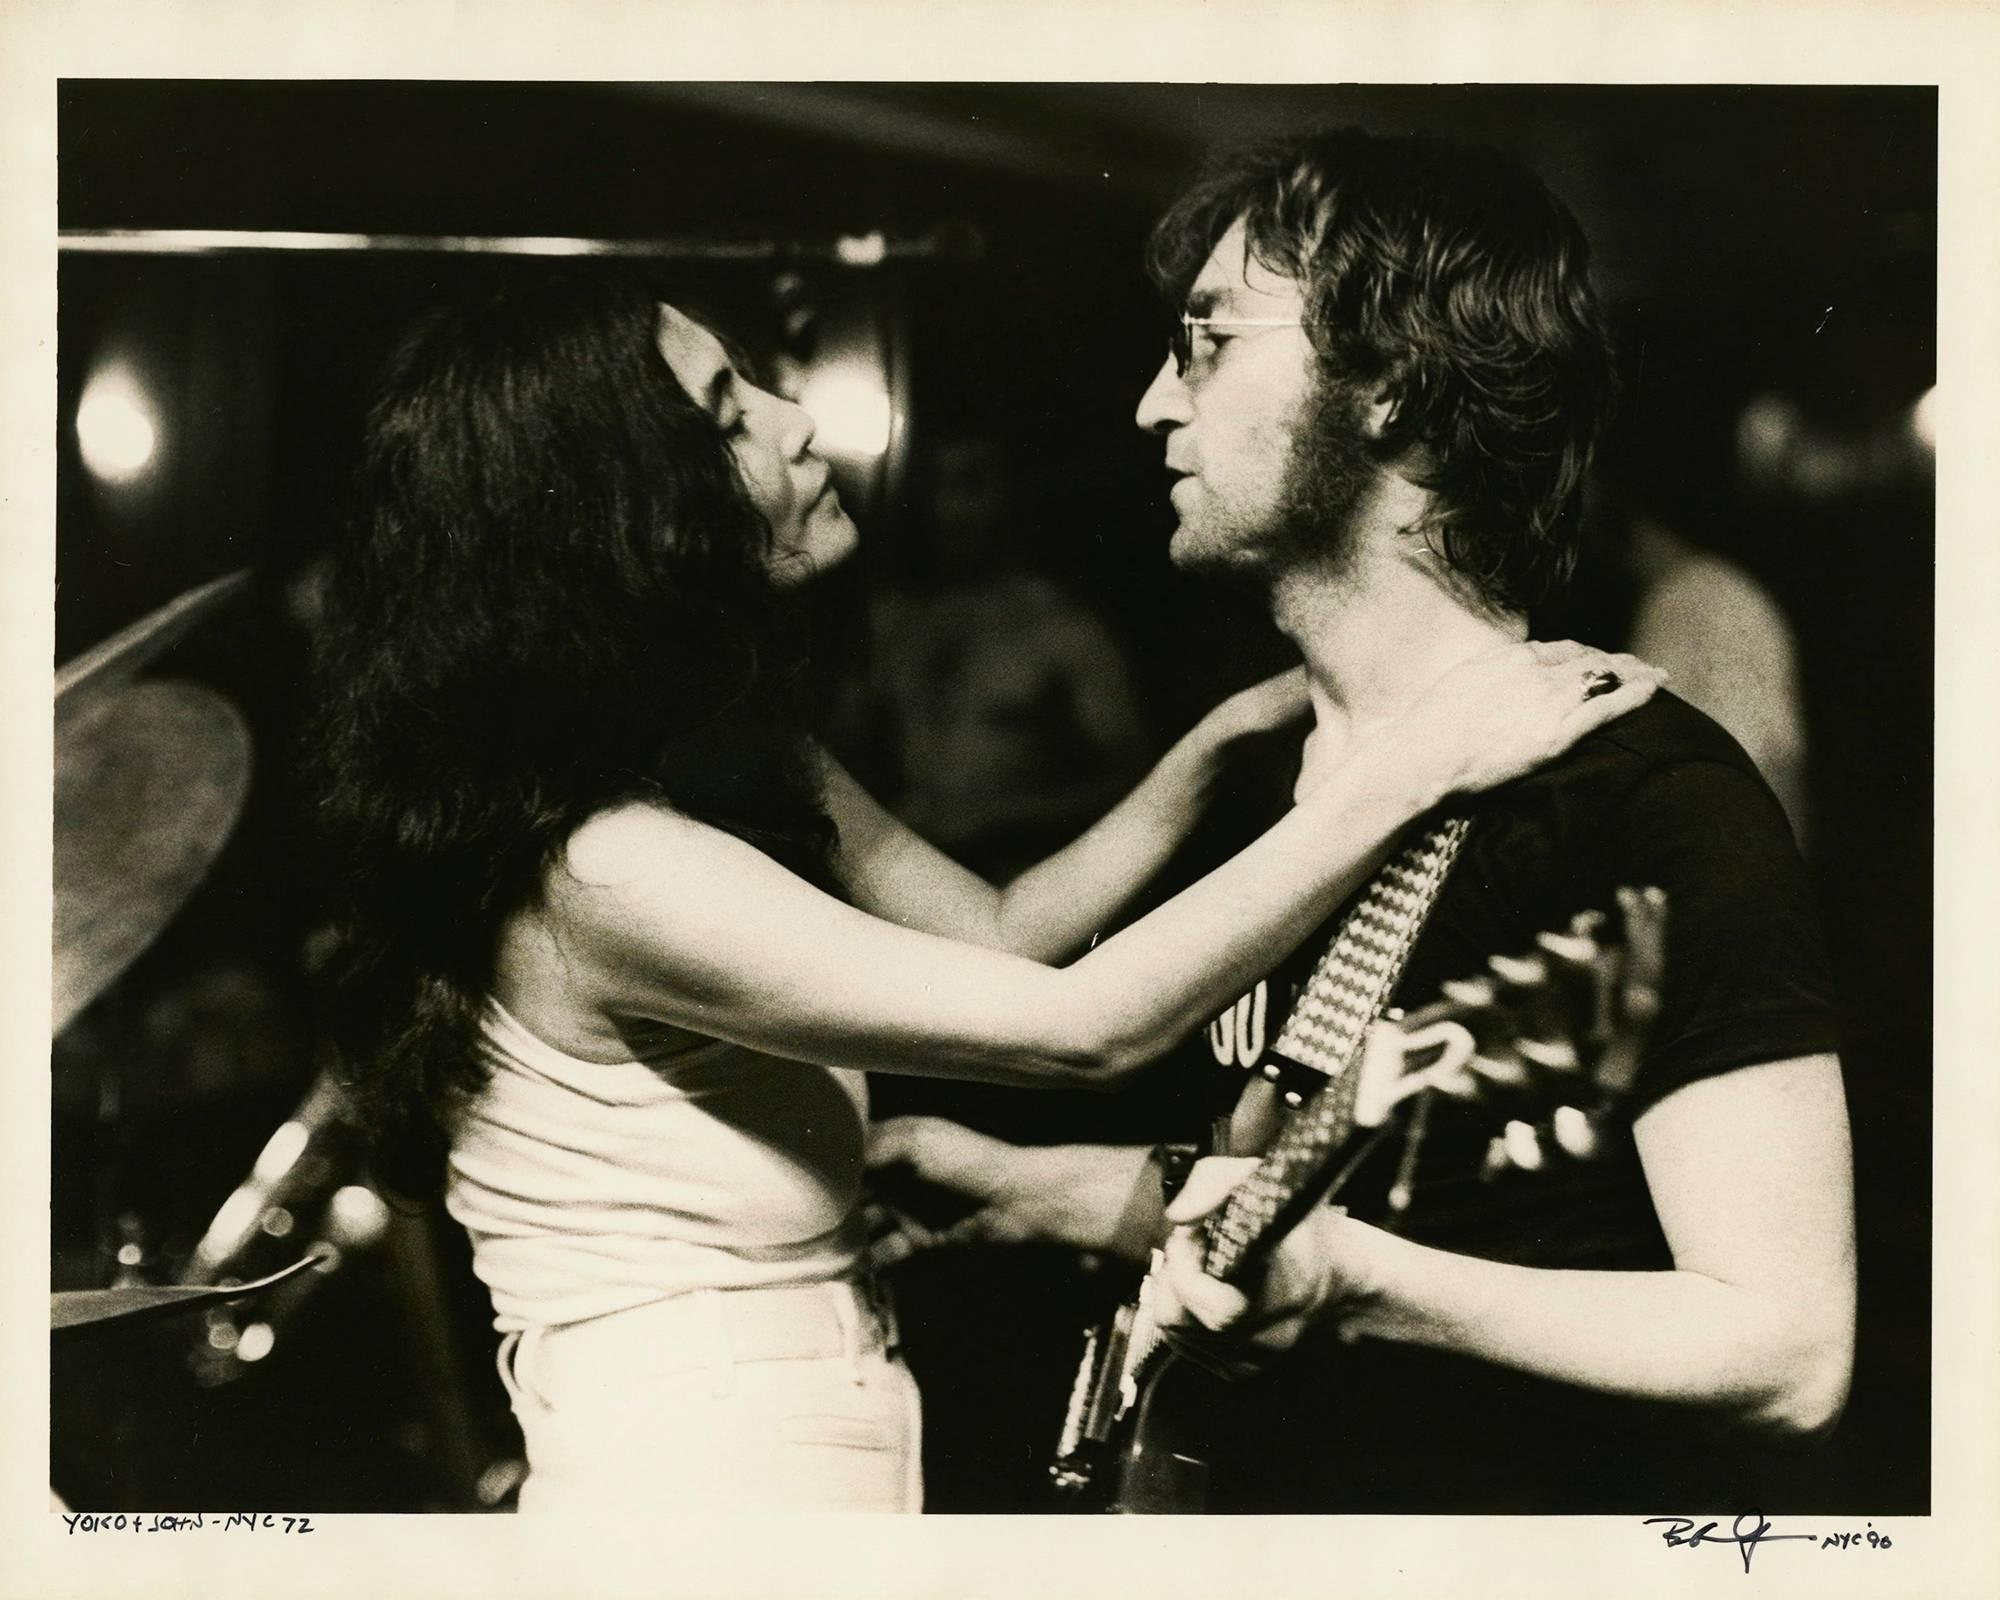 Bob Gruen Black and White Photograph - John Lennon and Yoko Ono Photograph, New York, 1972